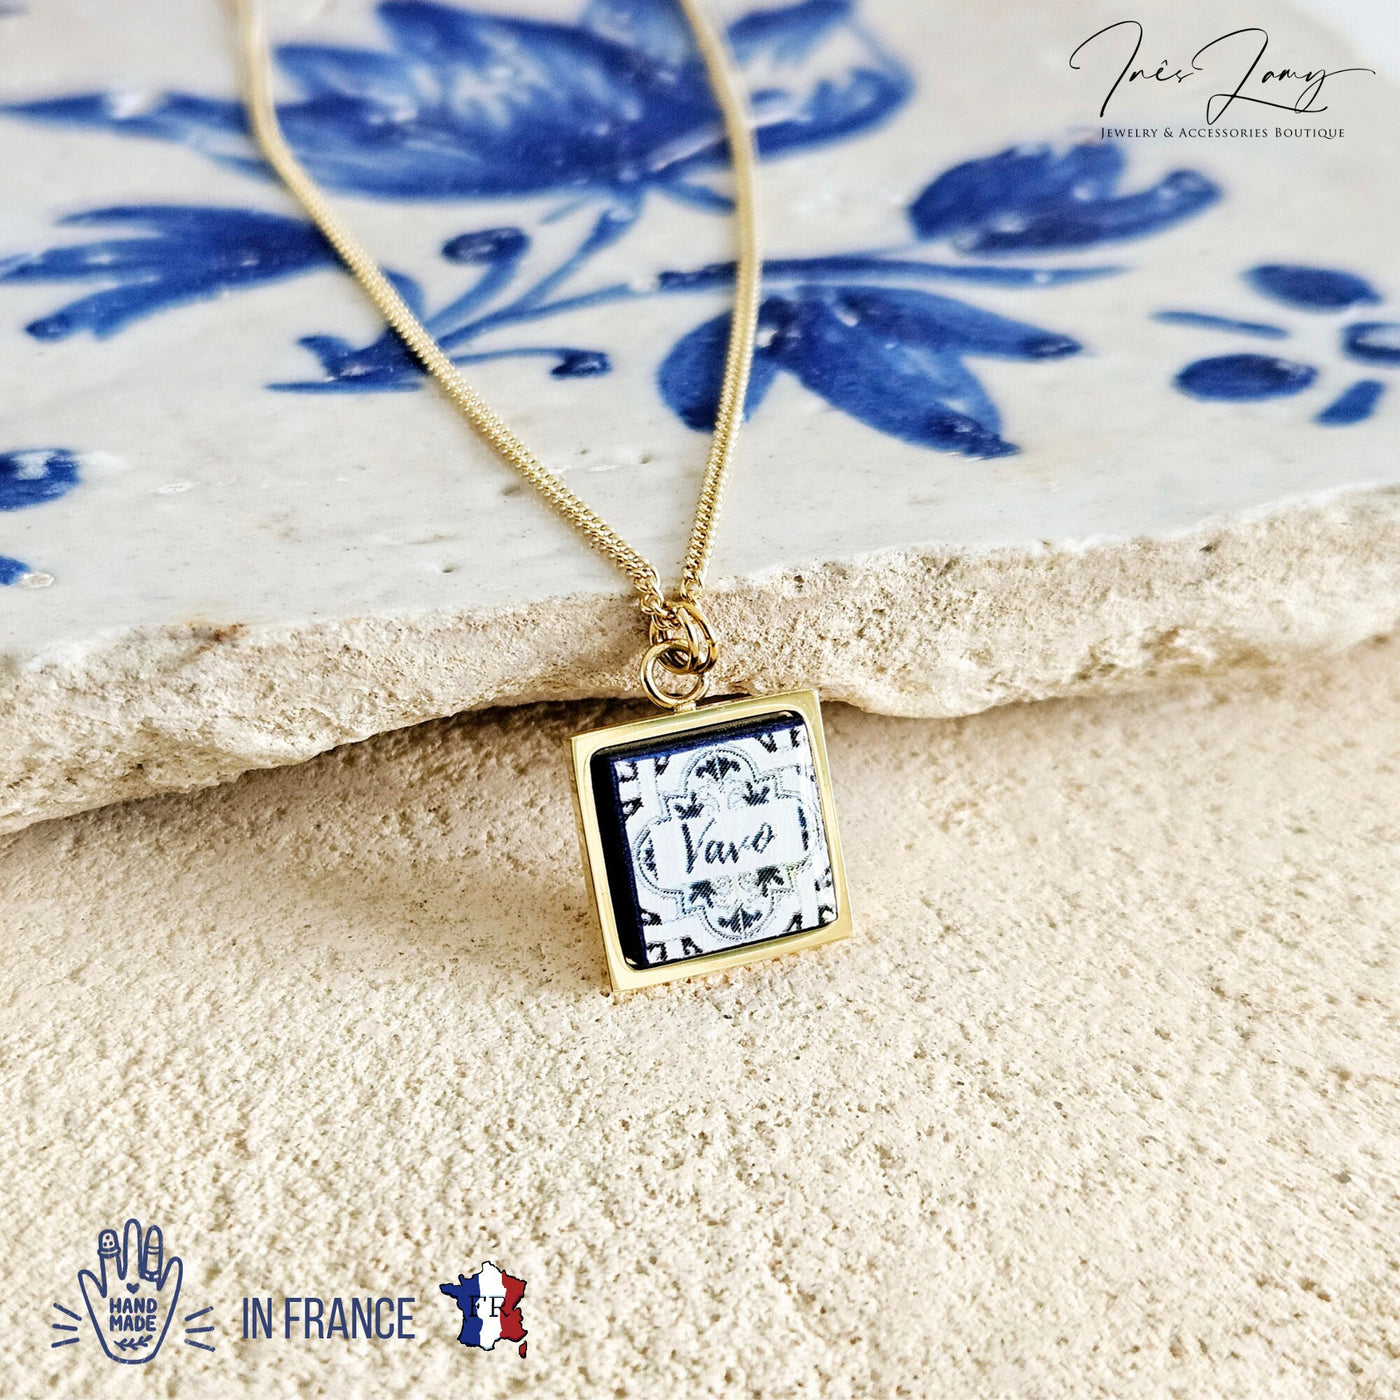 Personalized Avó Portugal Tile Necklace Grandma Gift Custom Handmade Gift Grandma Necklace Nana Jewelry Vovó Blue White Tile Azulejo Pendant